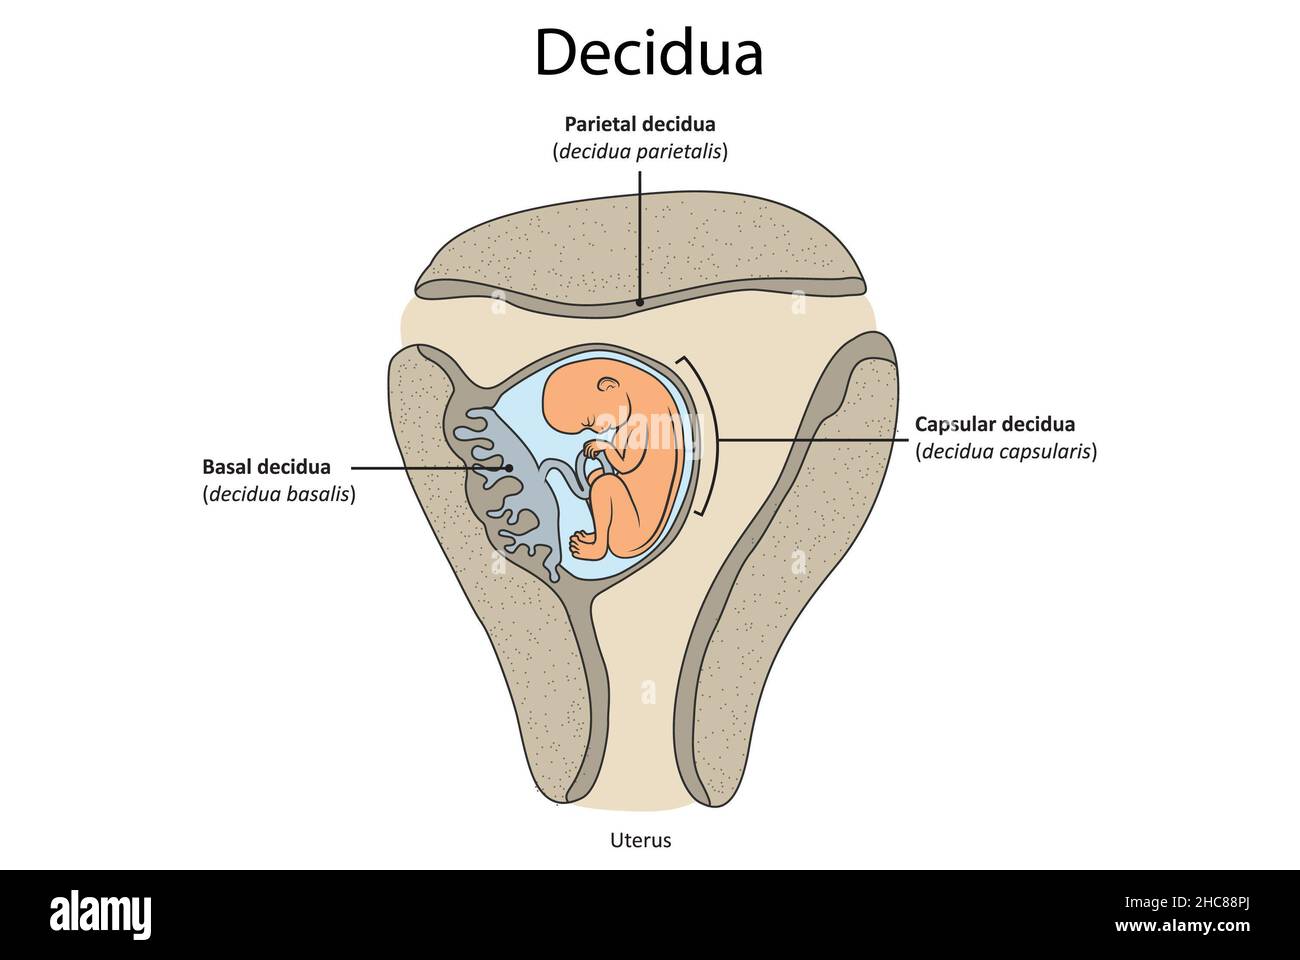 Simple illustration showing key parts of the decidua: decidua parietalis, decidua basilaris, capsular decidua. Stock Photo